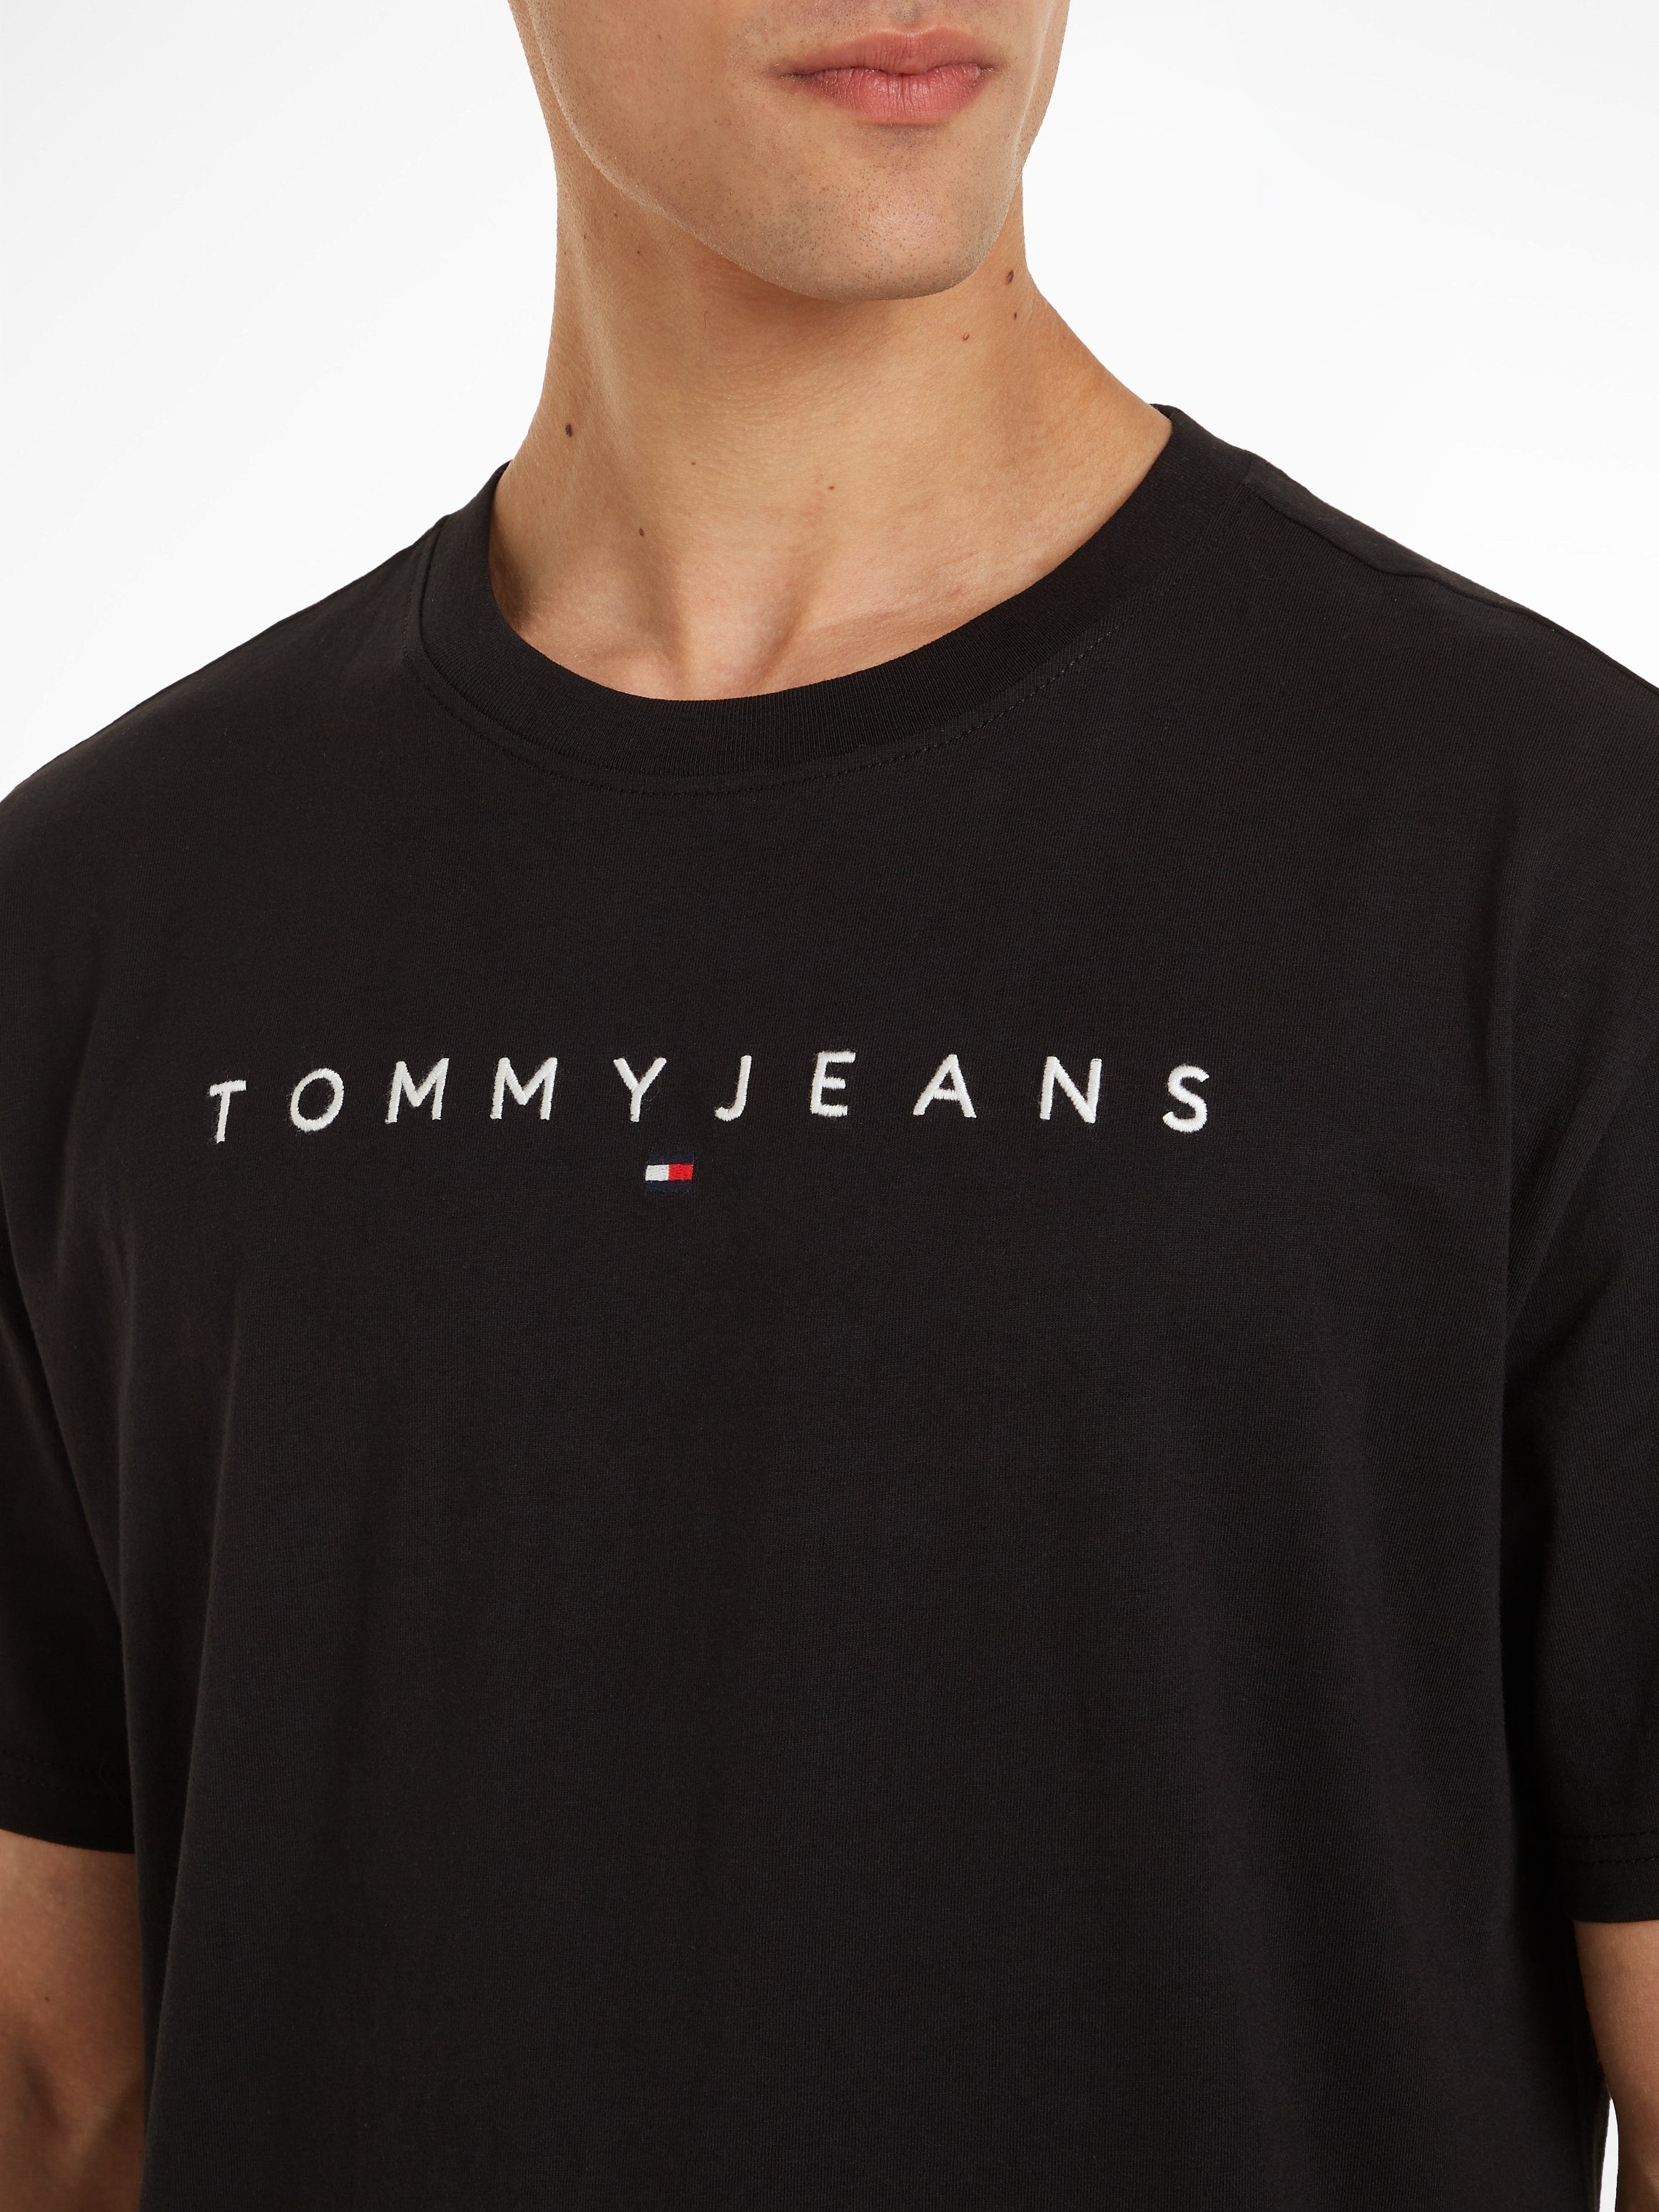 Tommy Jeans Plus TJM EXT Jeans LINEAR Tommy Logo-Schriftzug REG Black T-Shirt LOGO mit TEE